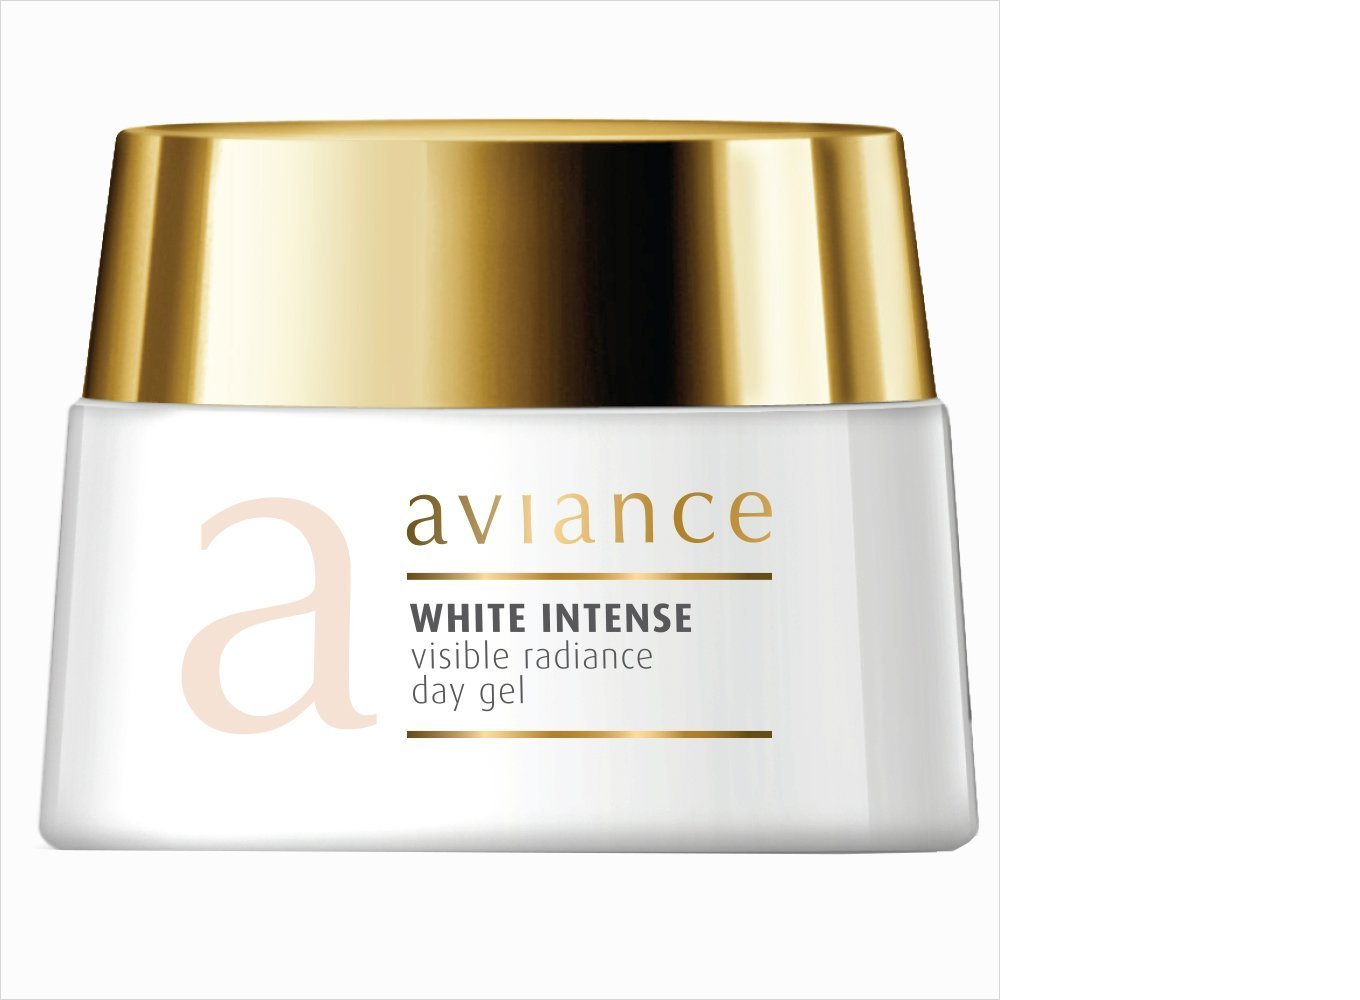 Buy Aviance White Intense Visible Radiance Day Gel